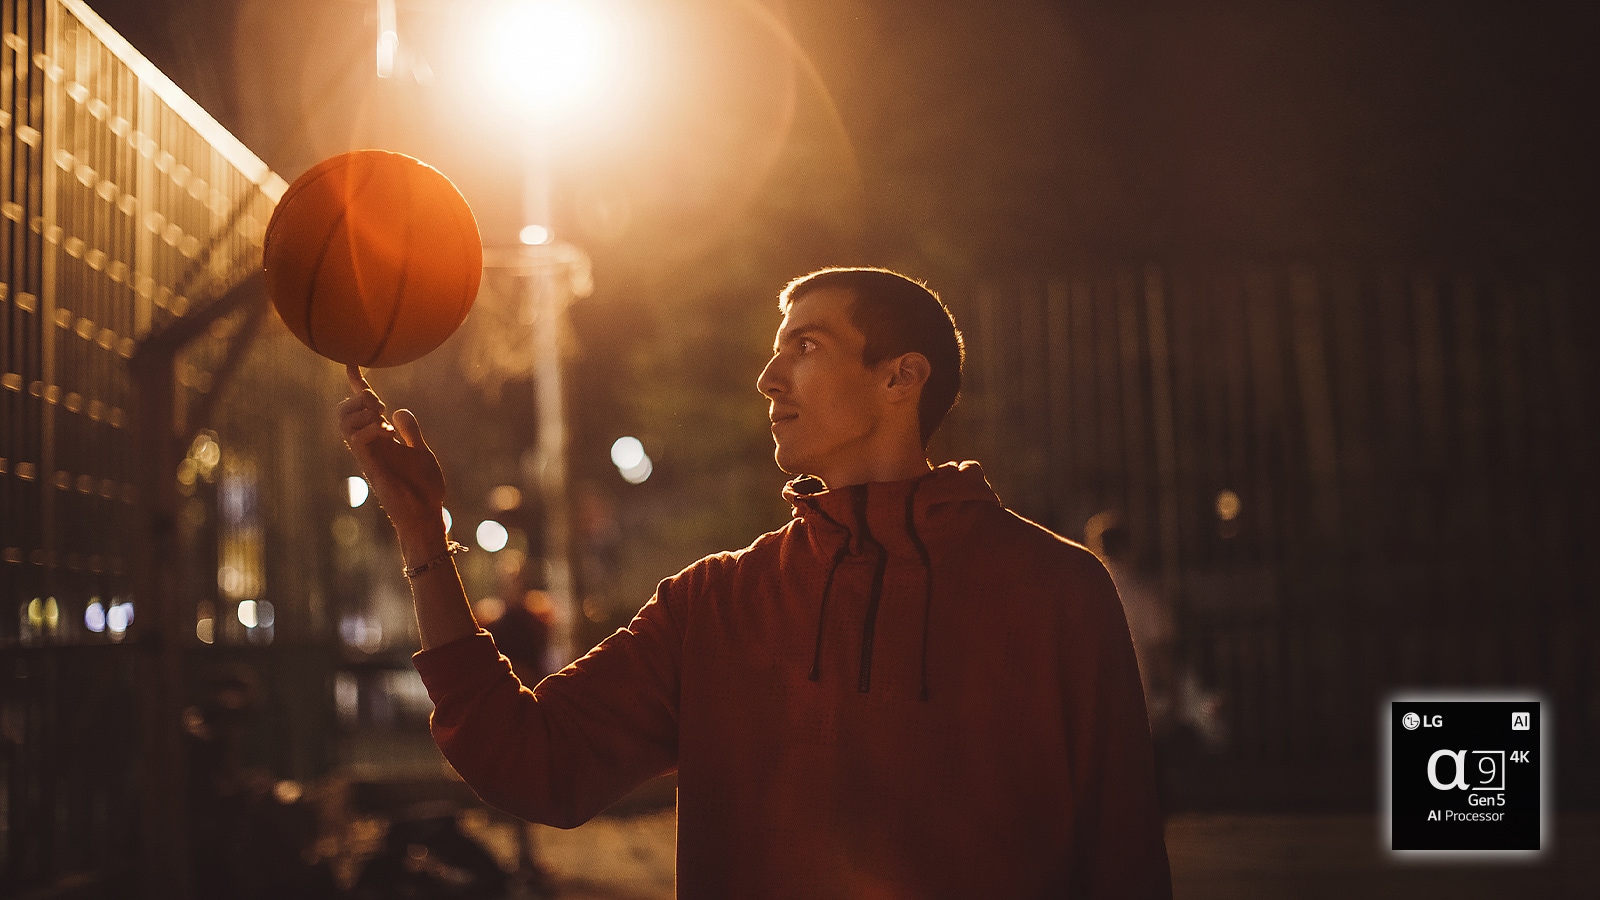 Muškarac na košarkaškom terenu noću vrti košarkašku loptu na vrhu prsta 